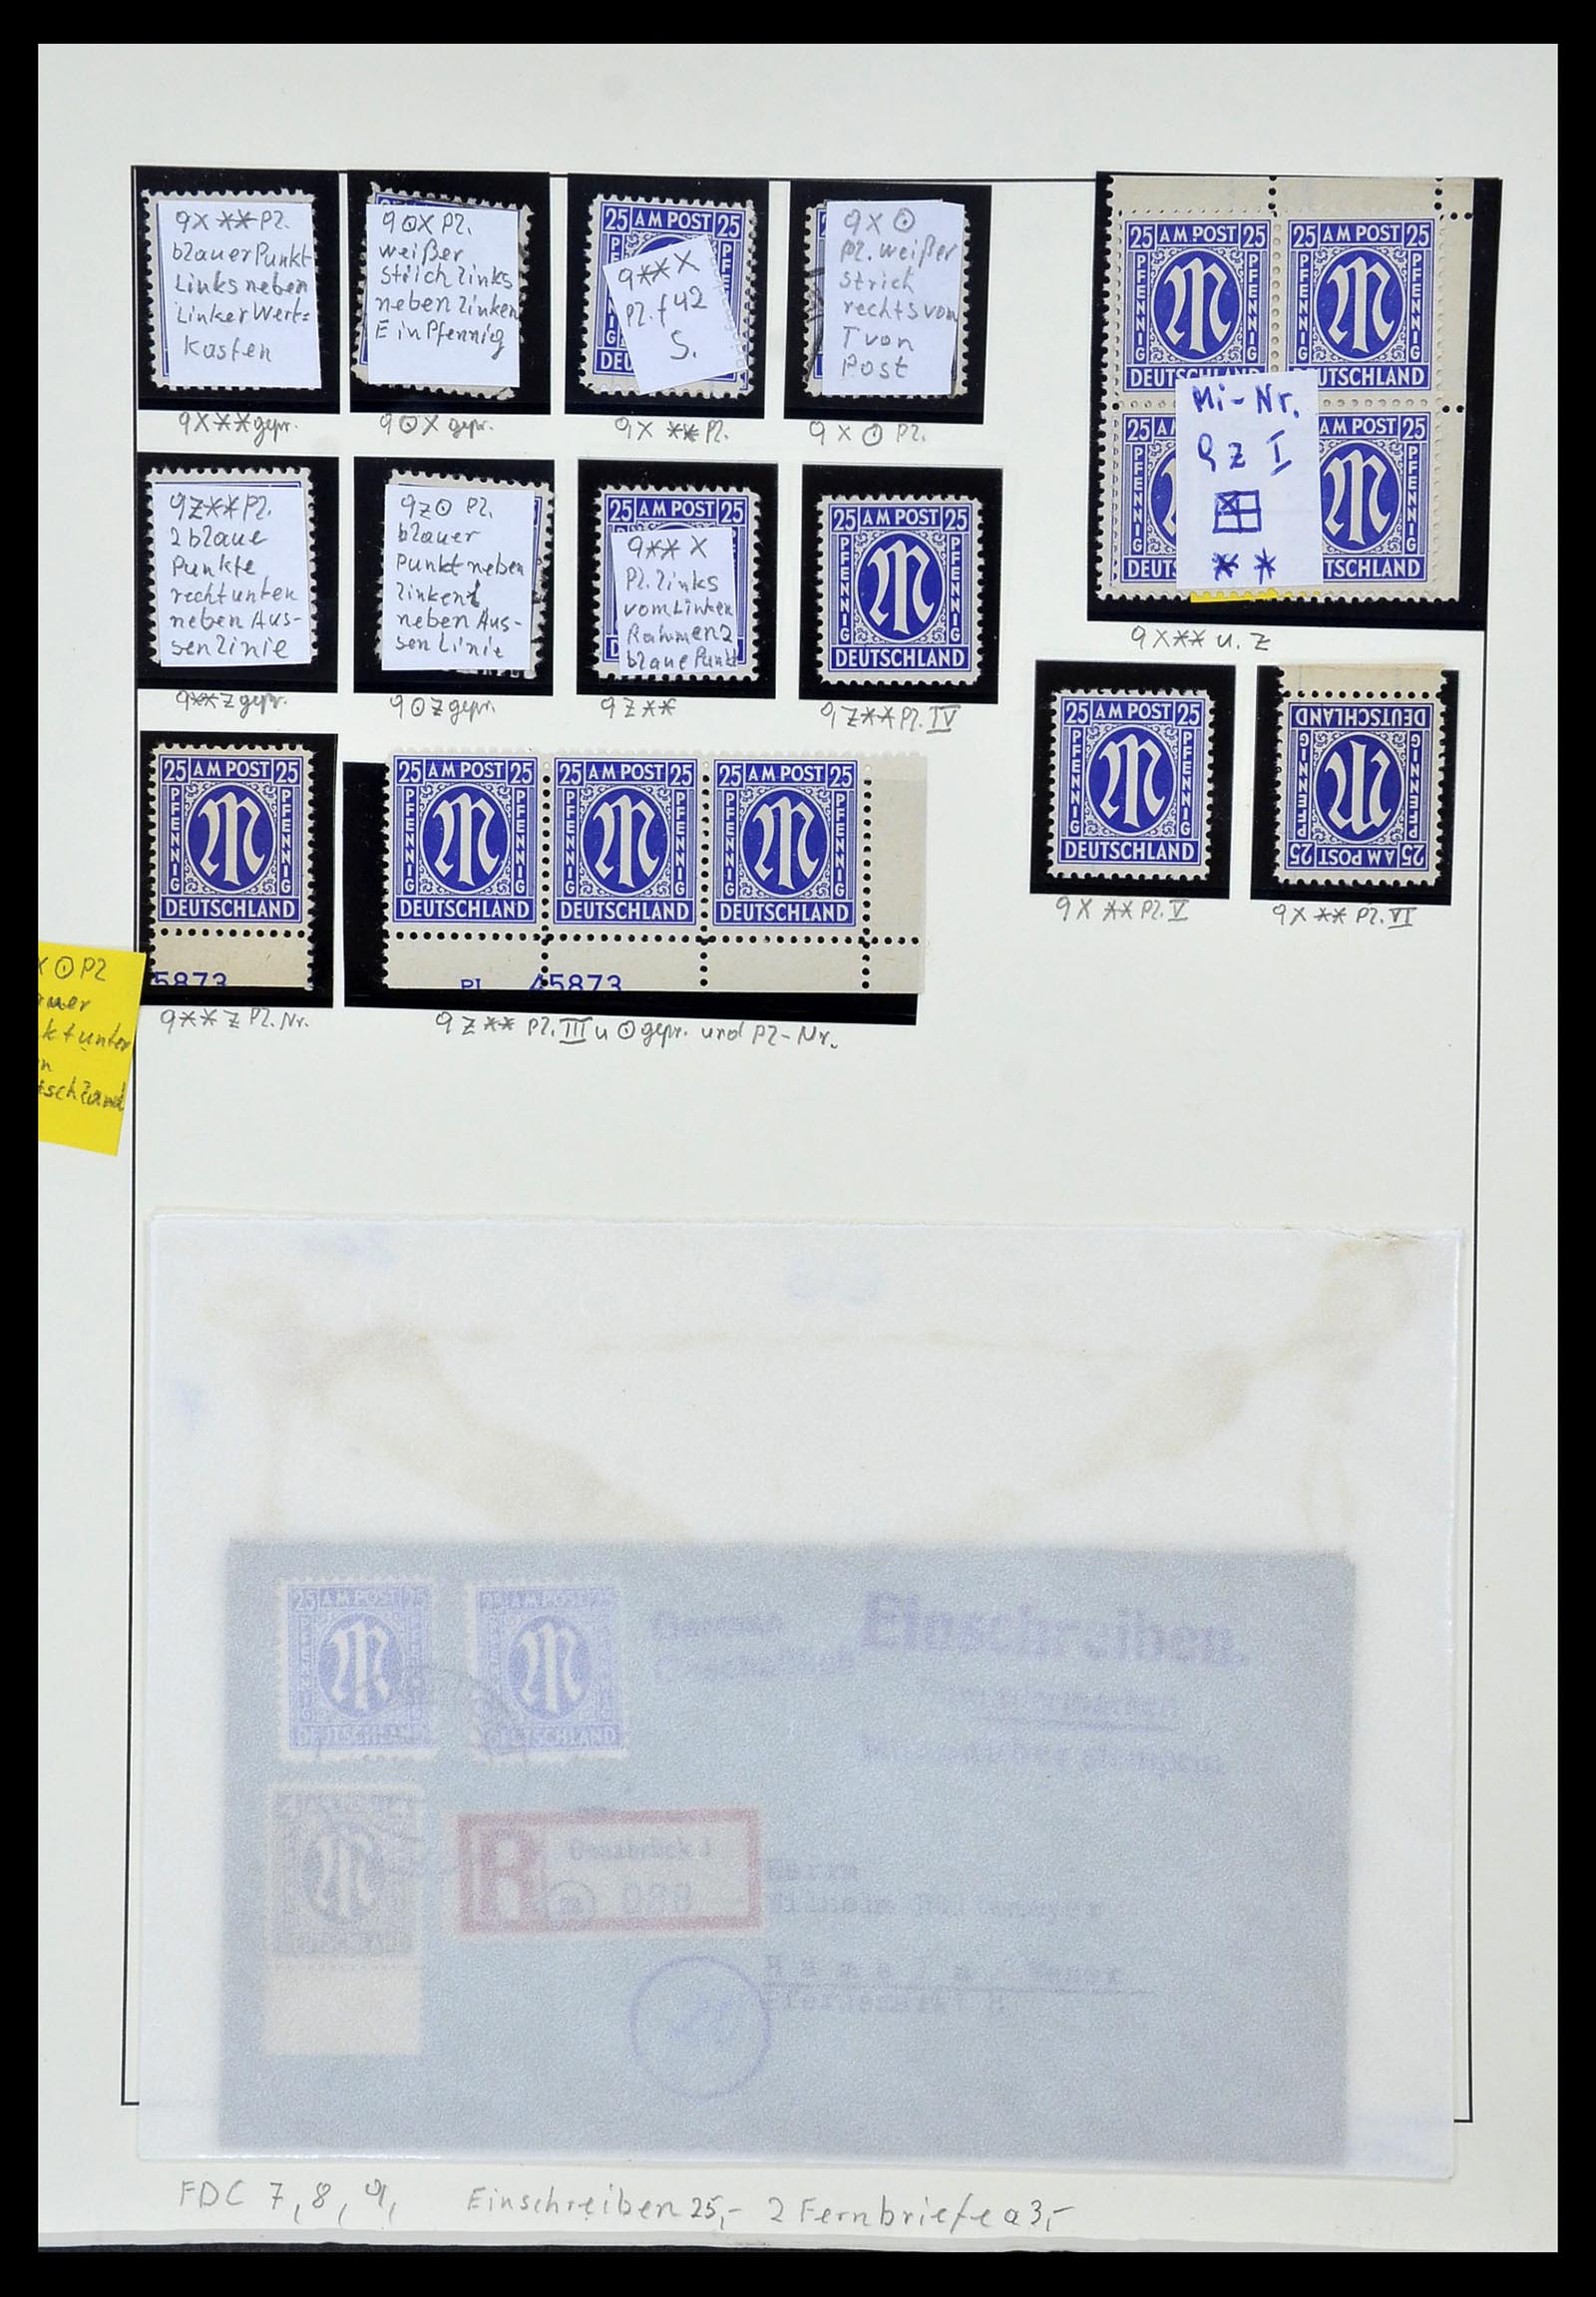 34152 033 - Stamp collection 34152 German Zones 1945-1949.